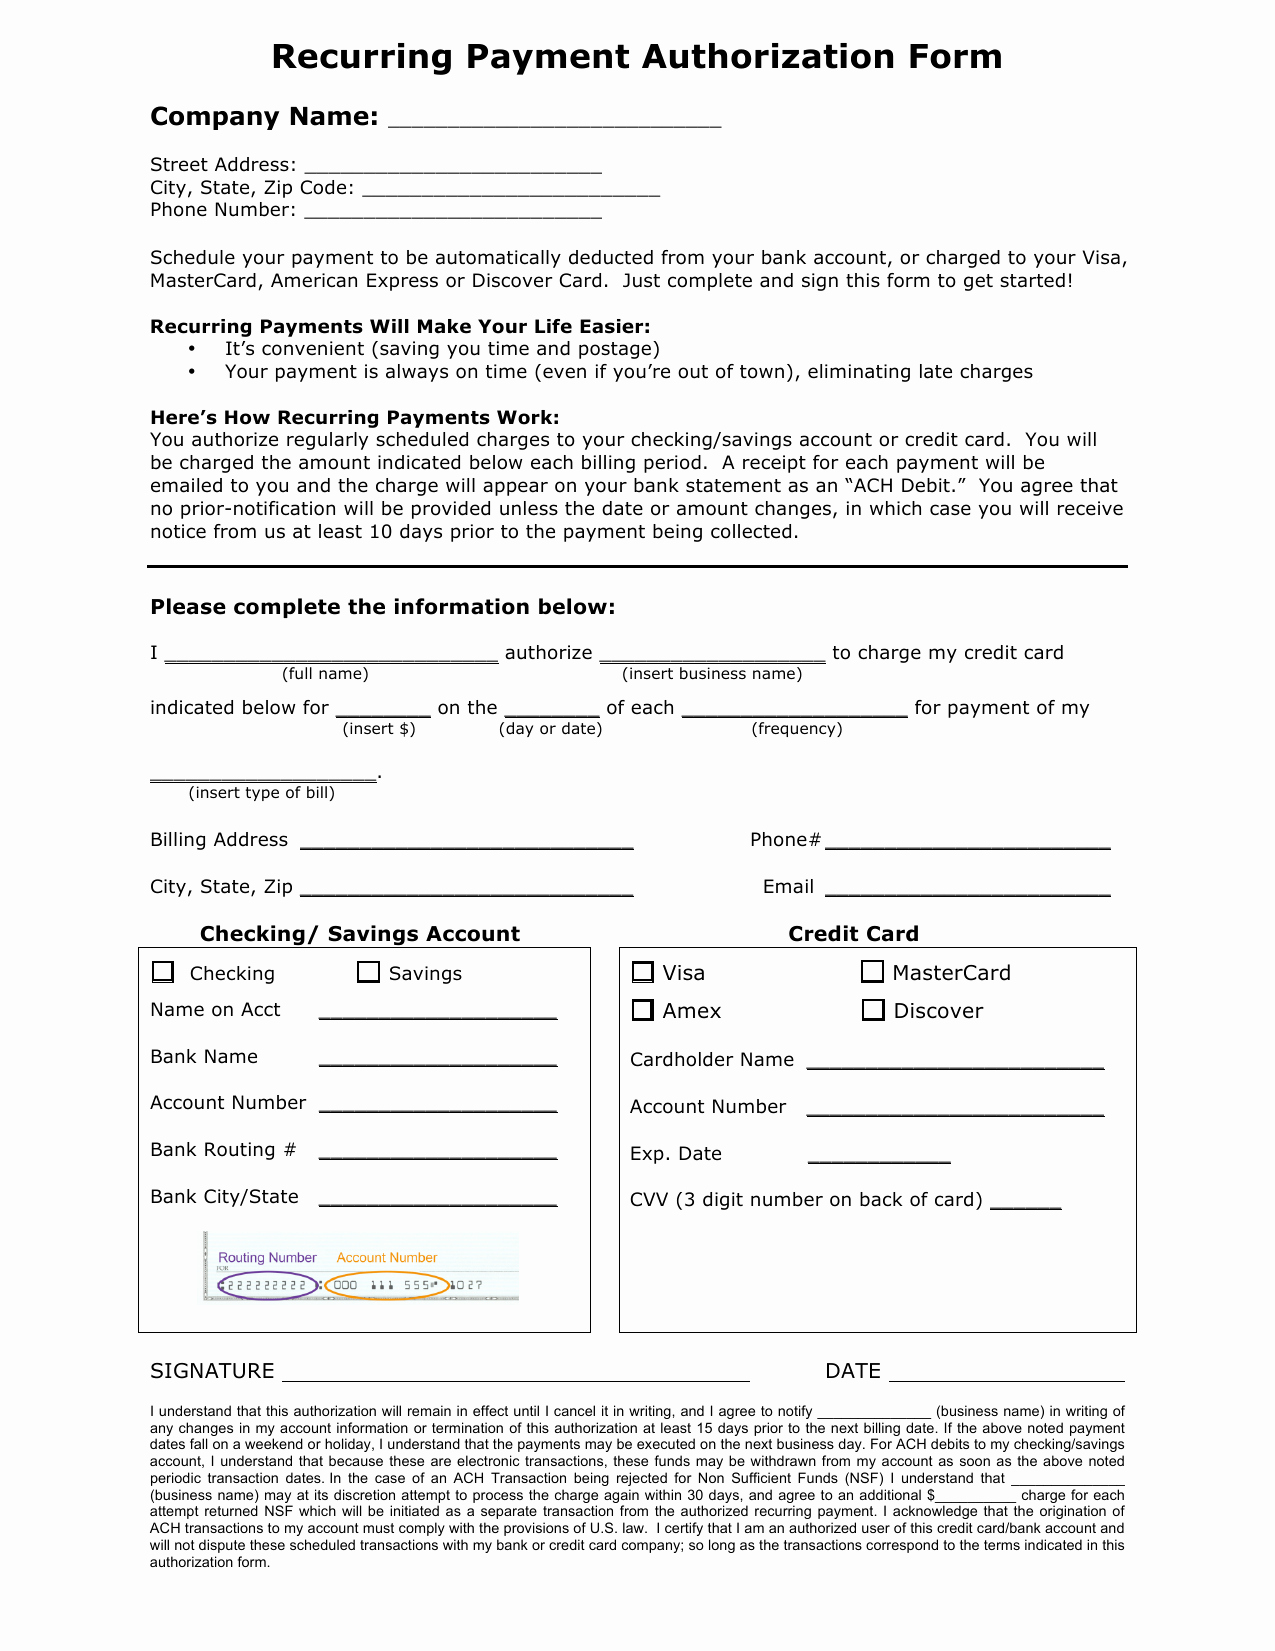 Ach Deposit Authorization form Template Elegant Download Recurring Payment Authorization form Template